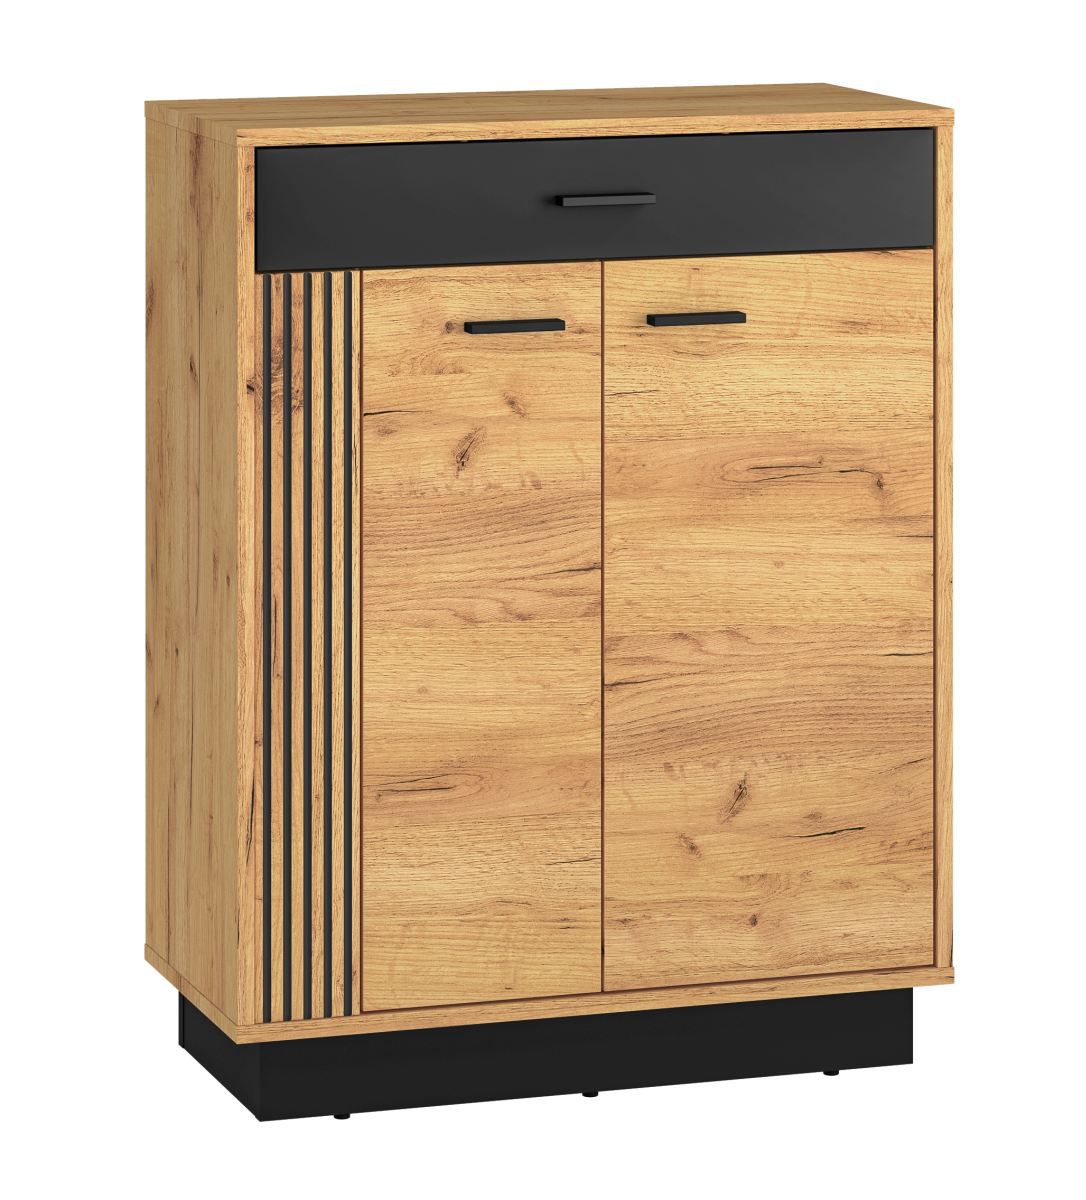 Shoe cabinet Lautela 05, color: oak / black - Dimensions: 91 x 70 x 34 cm (H x W x D), with 1 drawer, 2 doors and 4 compartments